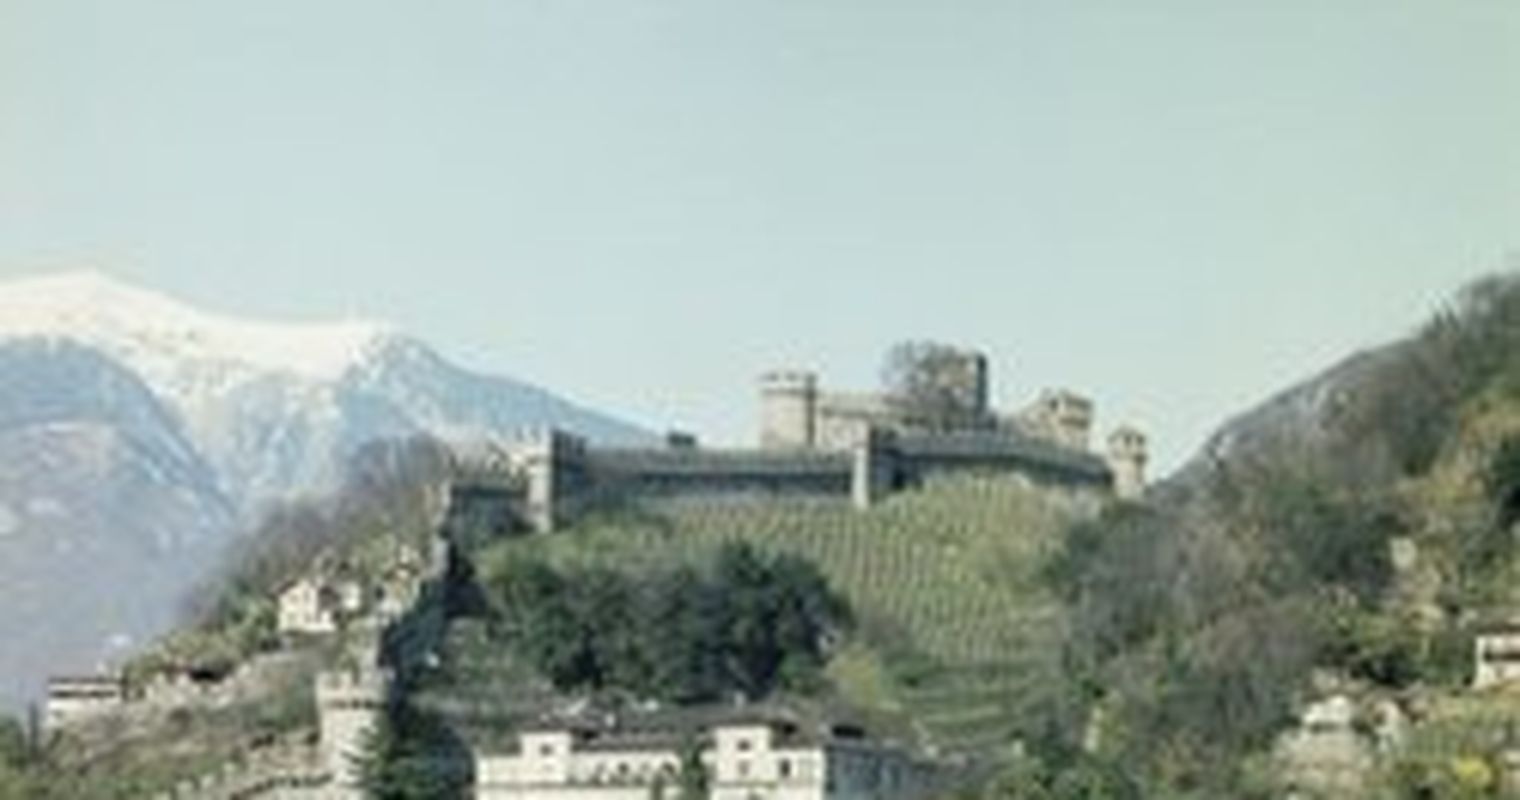 Erlebnisfahrt Gotthard-Bergstrecke bis Bellinzona